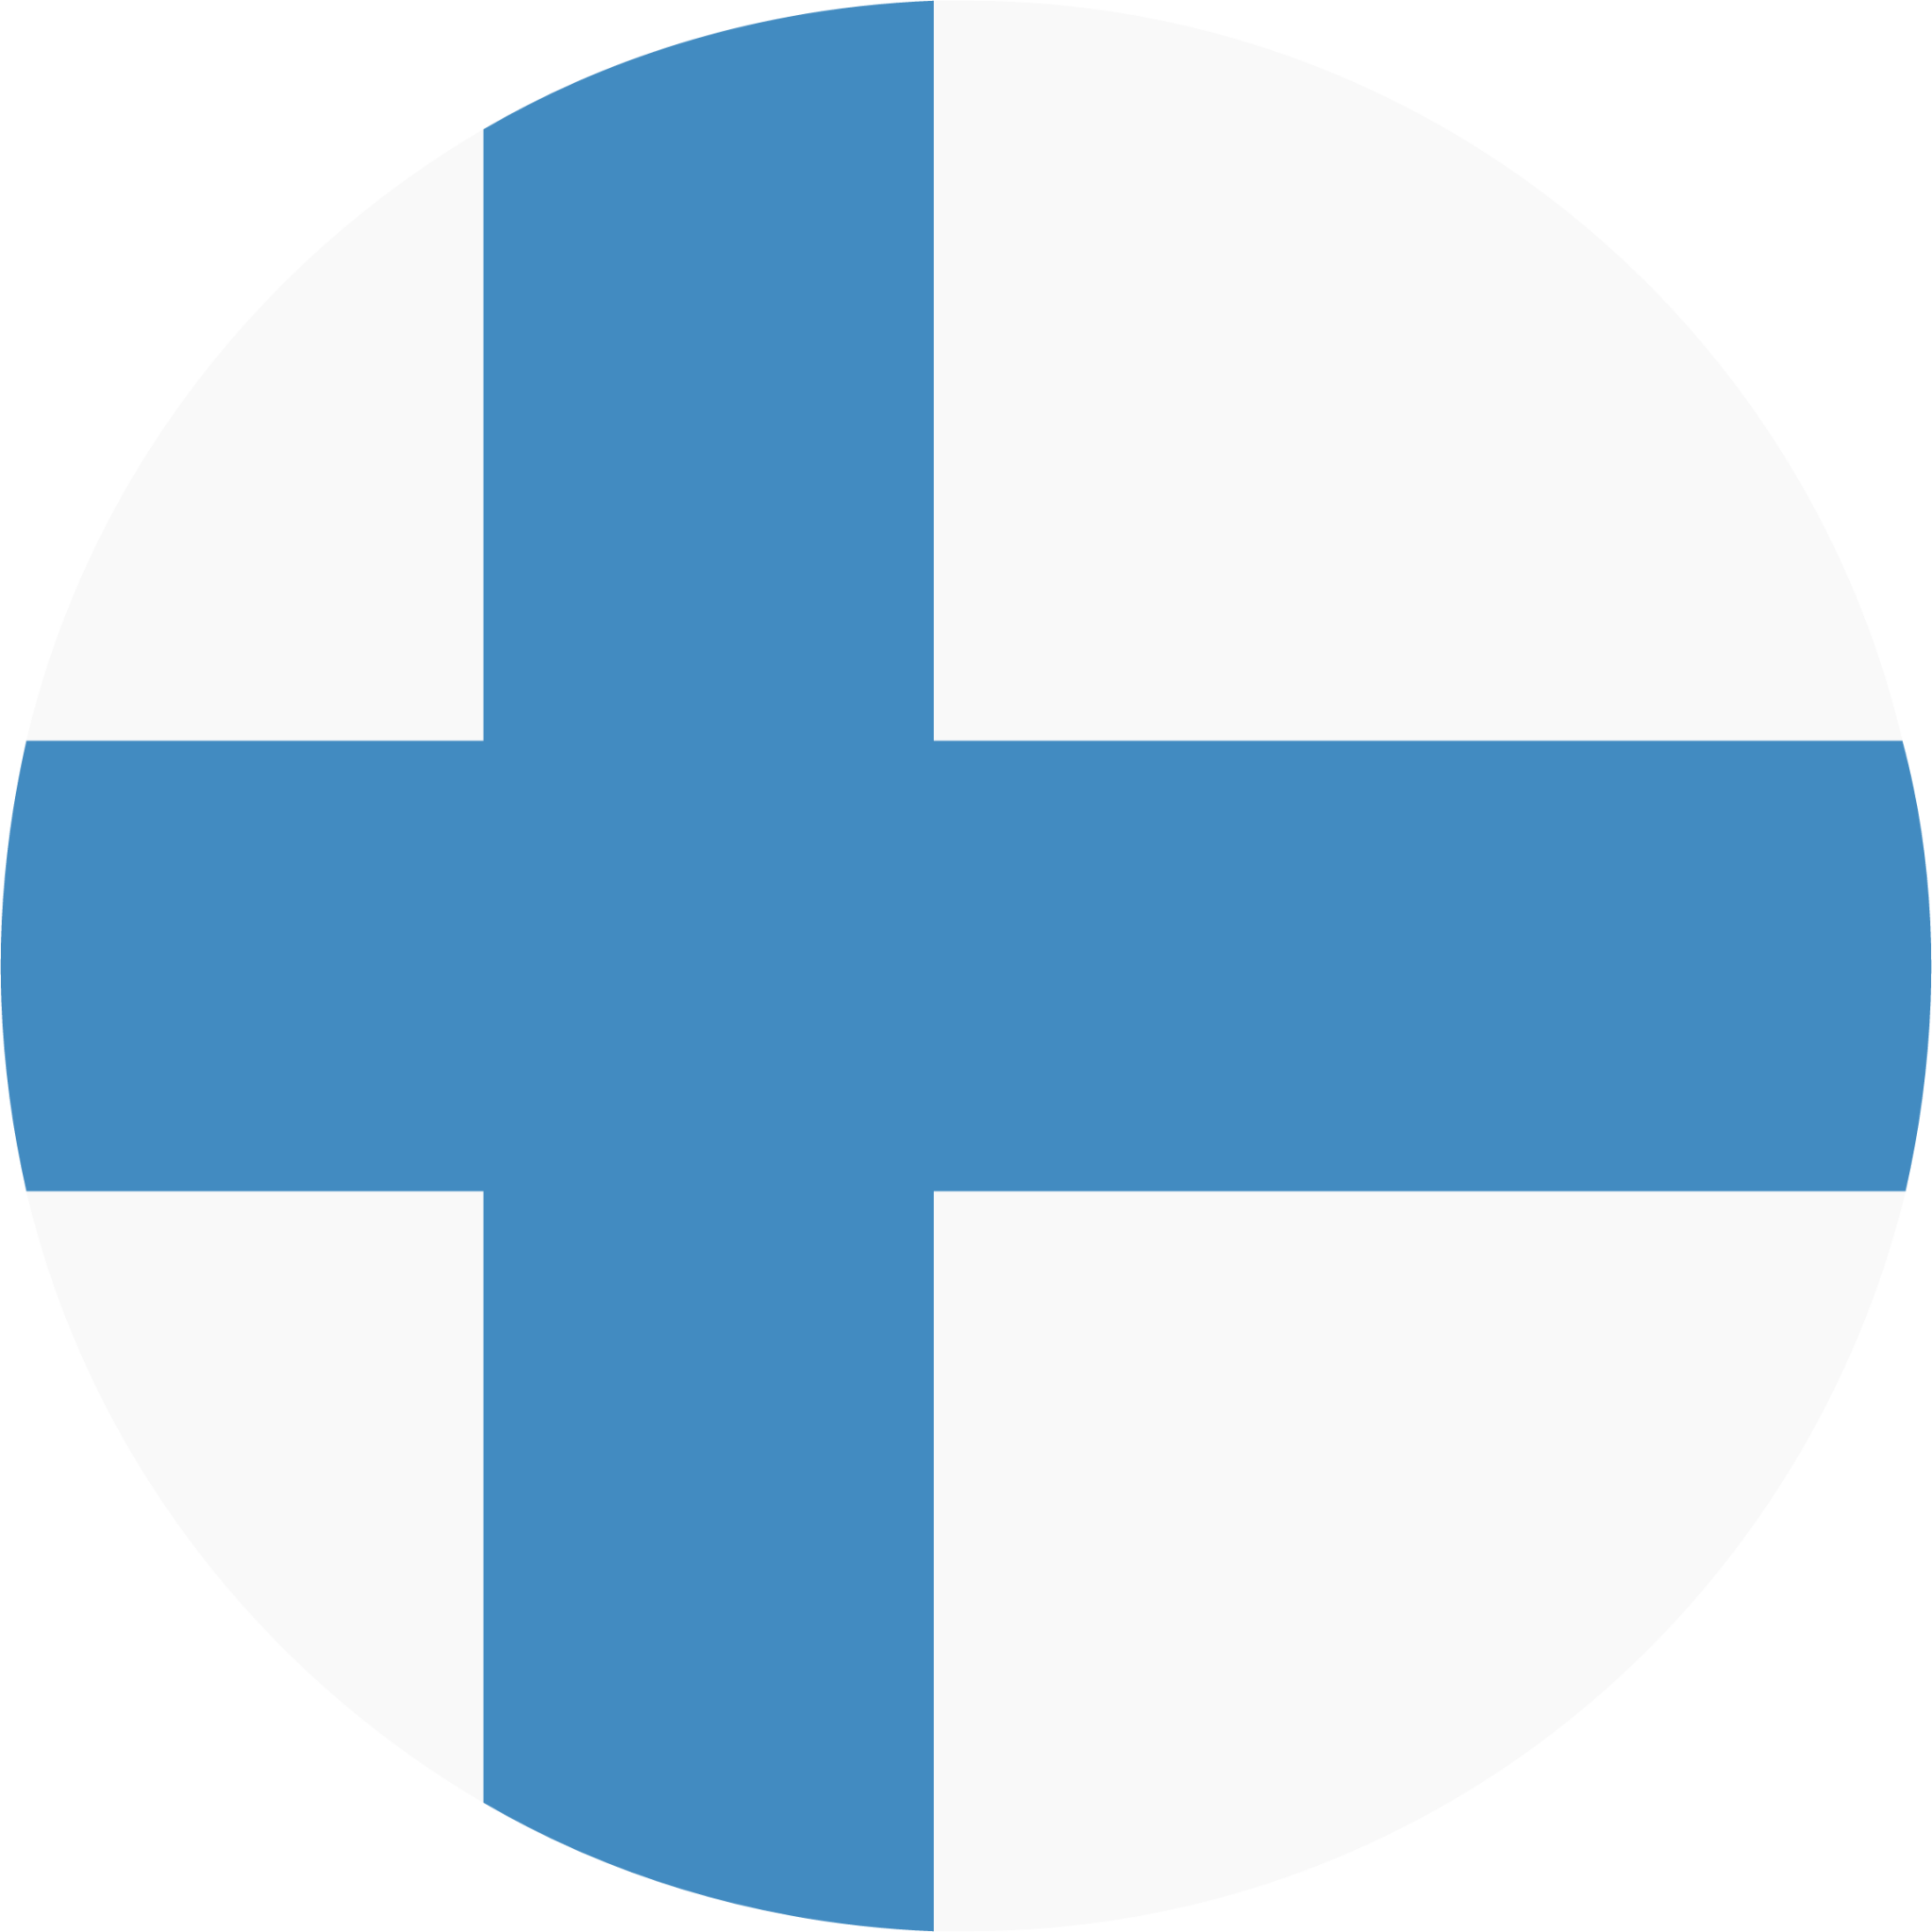 finland emoji